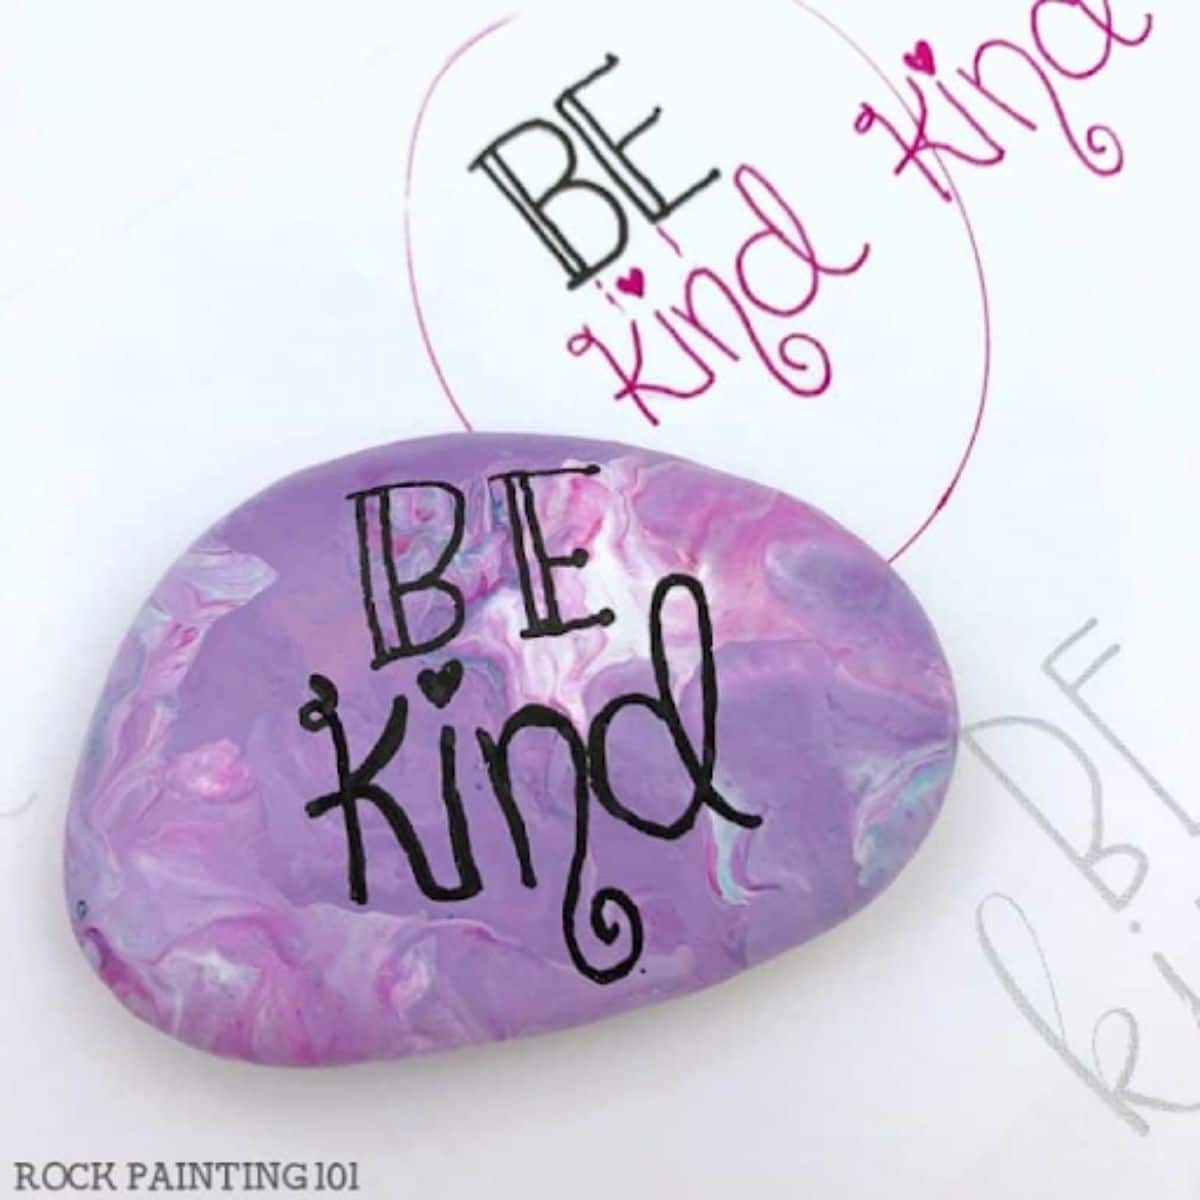 Kindness Stones